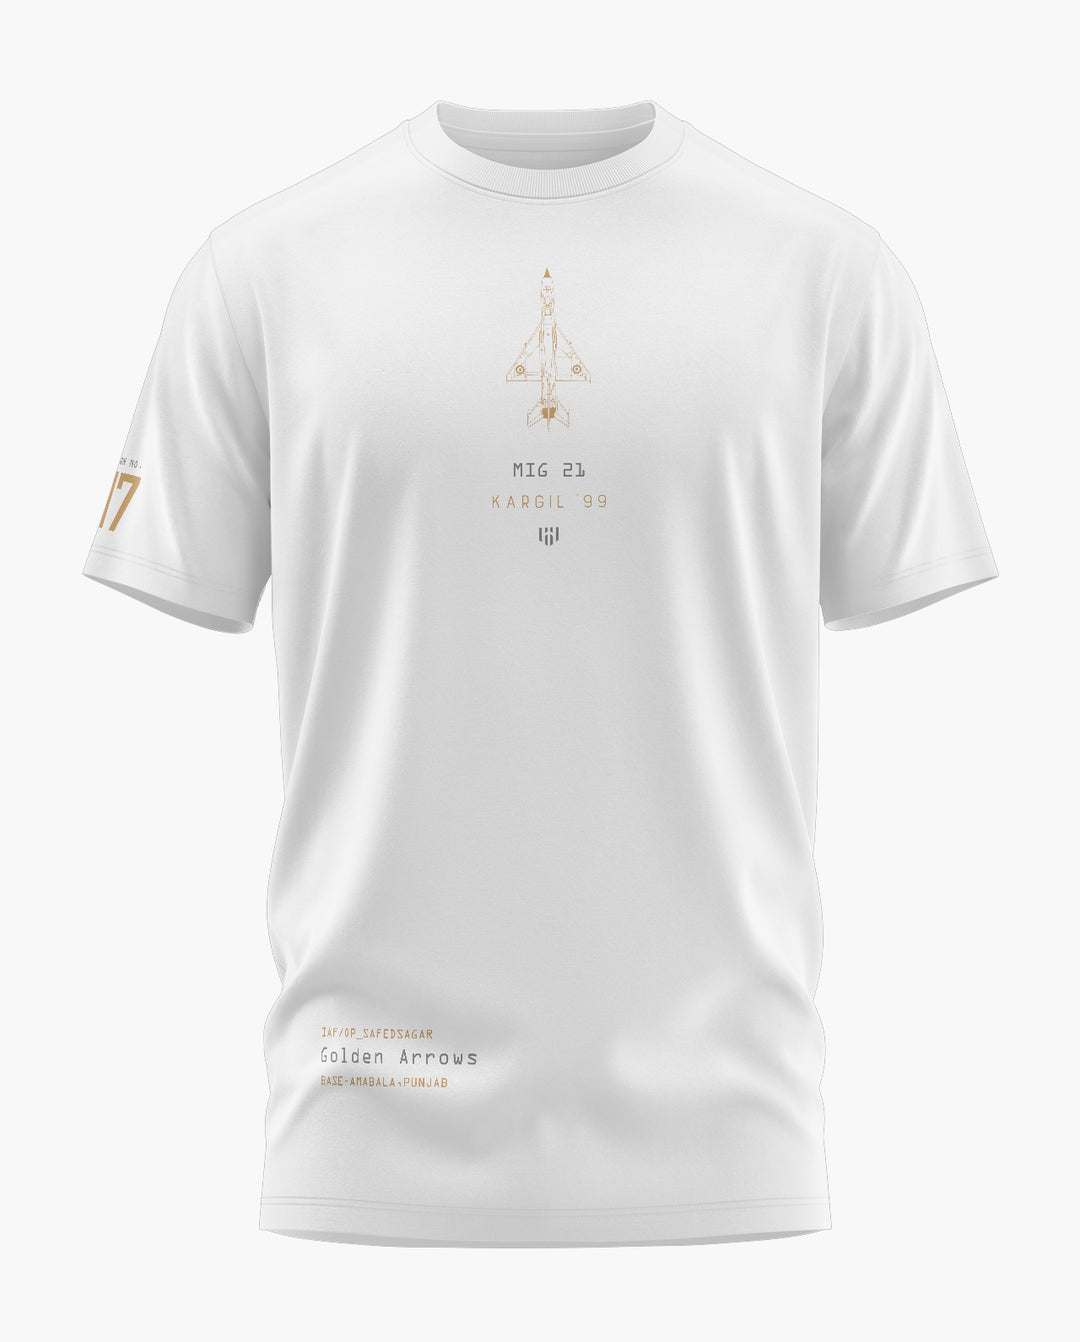 GOLDEN ARROWS KARGIL T-Shirt